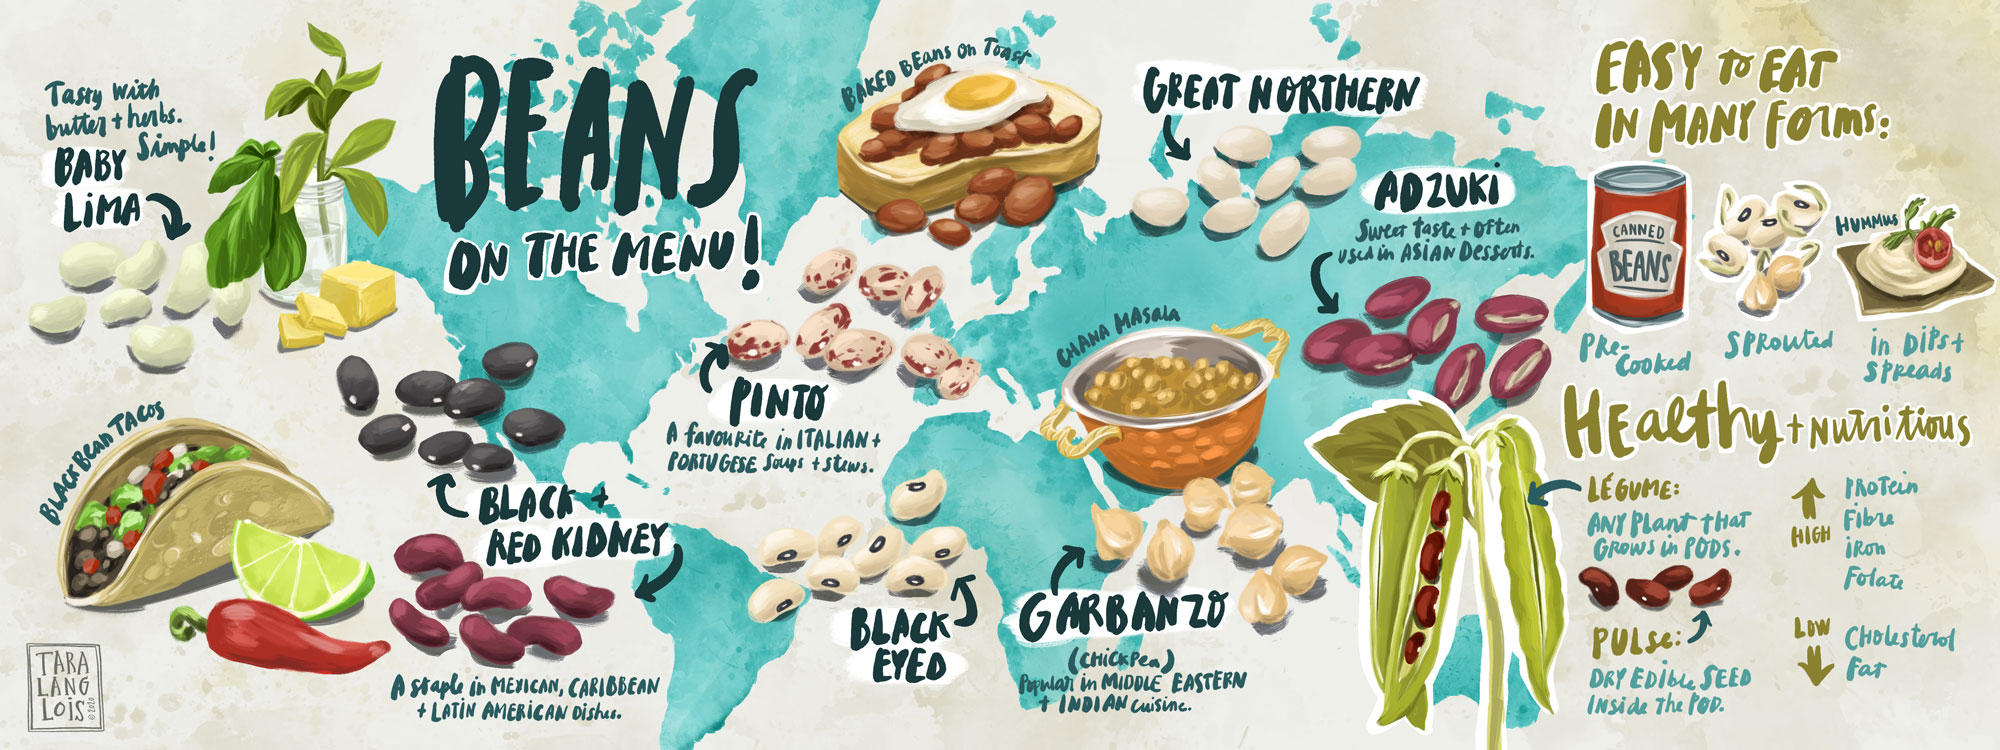 beans around the world illustration